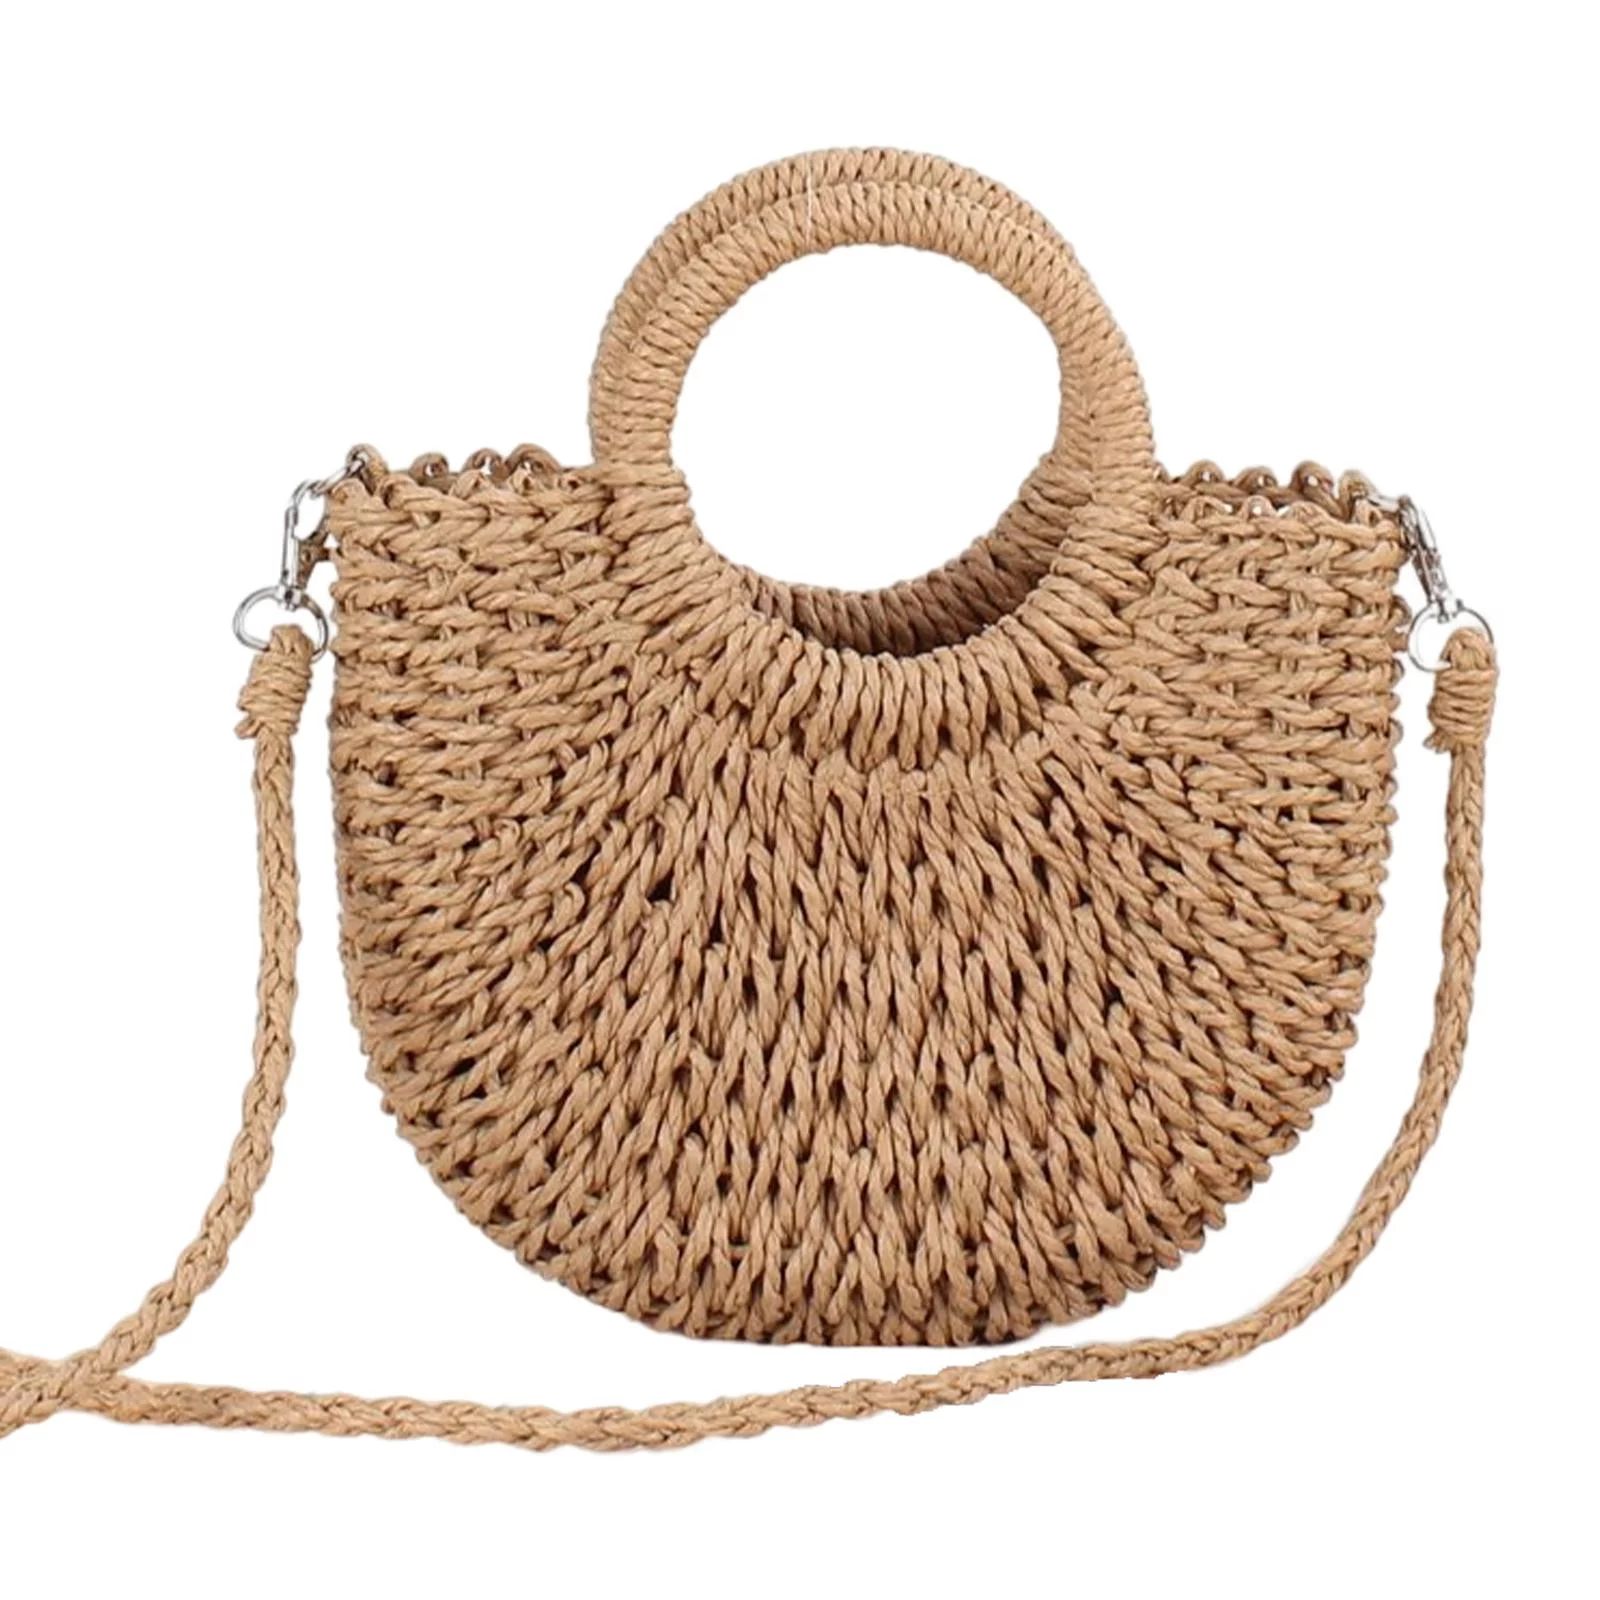 Straw Women Bag Handbag Shoulder Strap Top Handle Summer Small Hobo Bag Tote Brown 9.45x10.24inch | Walmart (US)